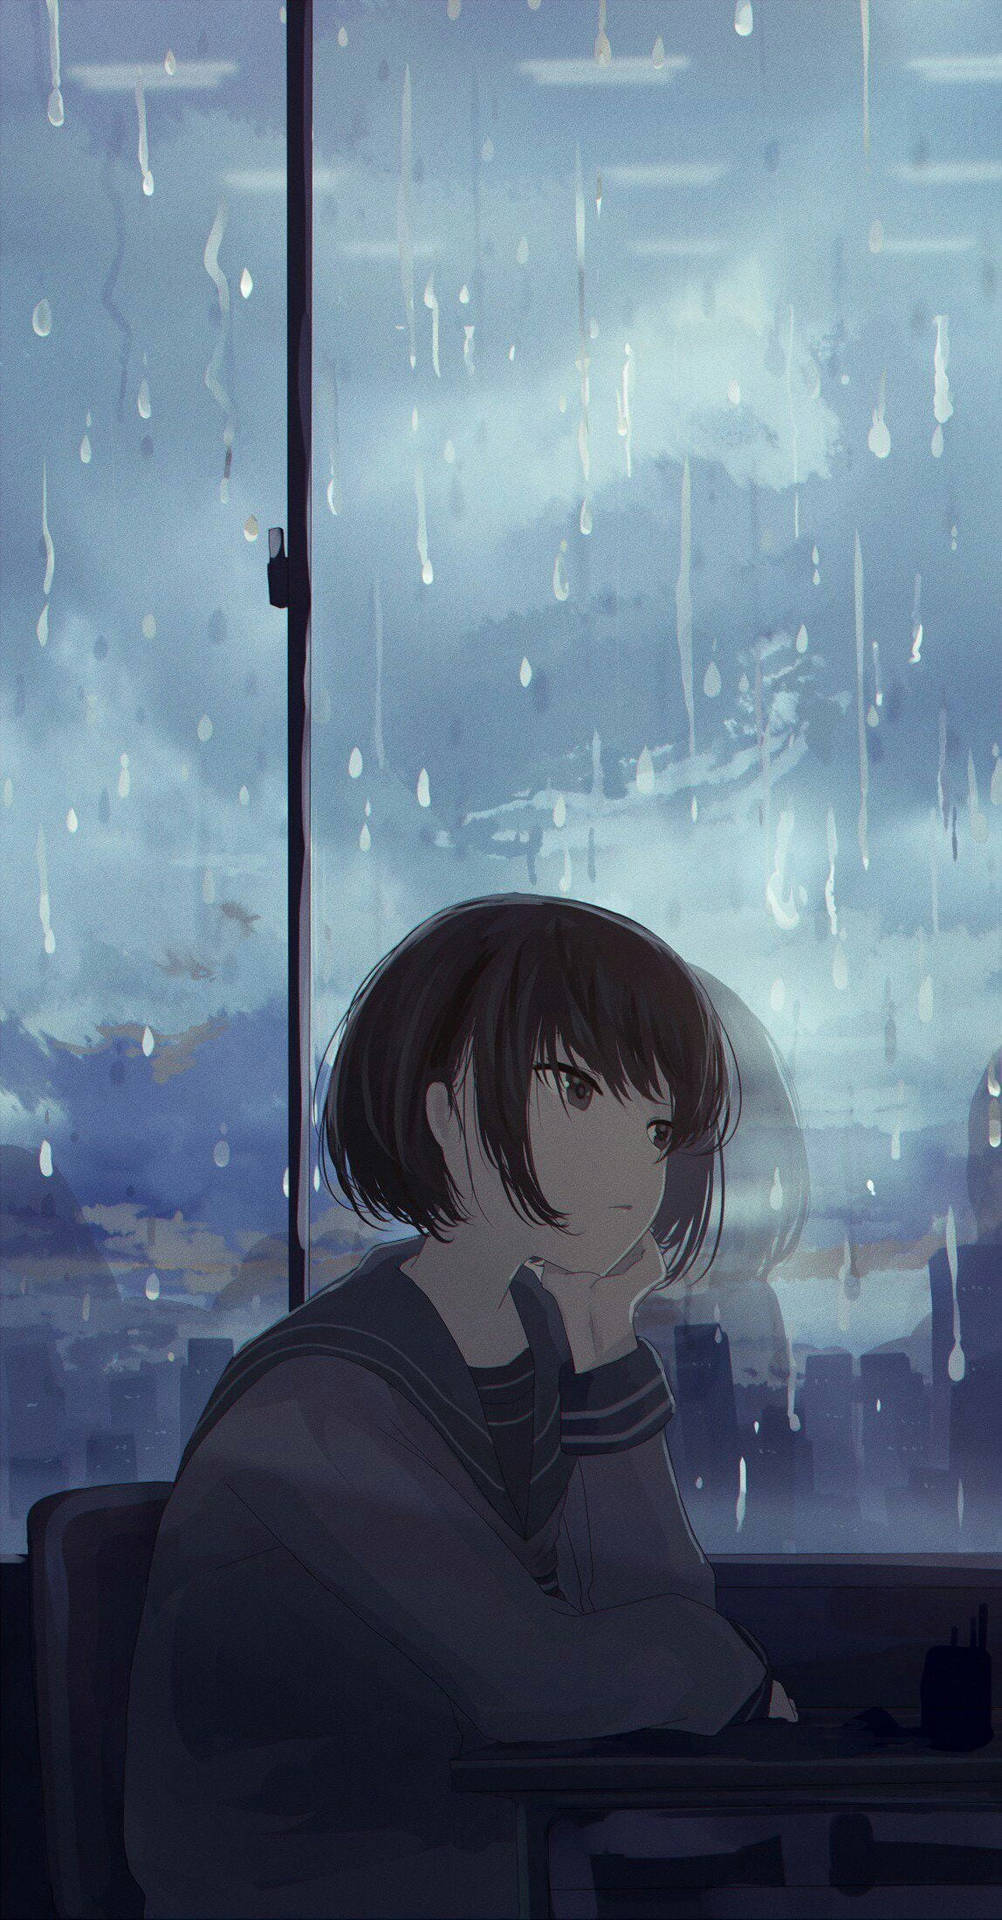 Download Sad Aesthetic Anime Girl Rainy Window Wallpaper 